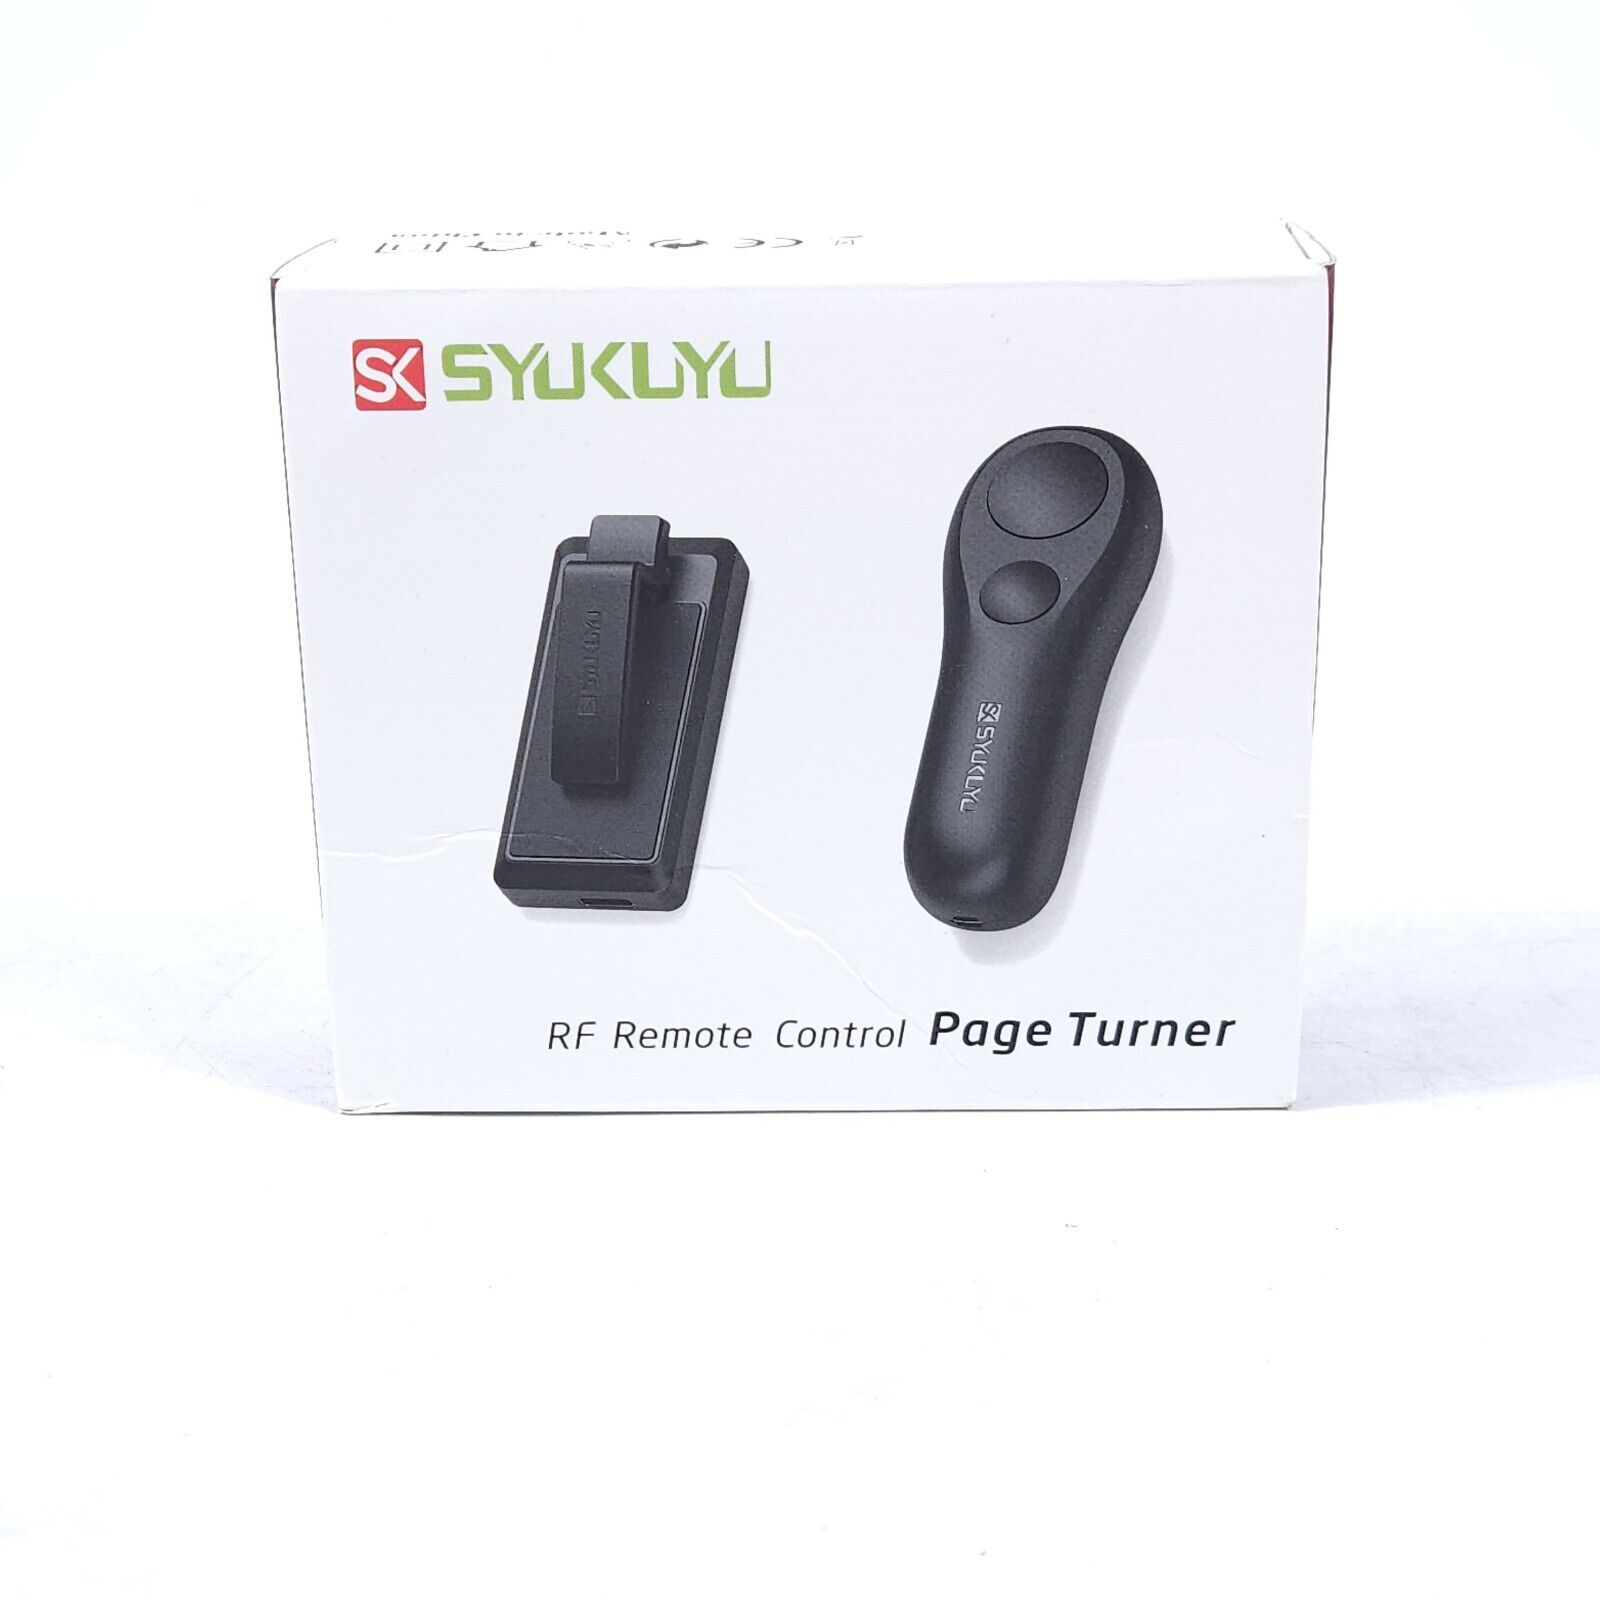 SK SYUKUYU RF Remote Control Page Turner for Kindle Reading Ipad Surface Comics,